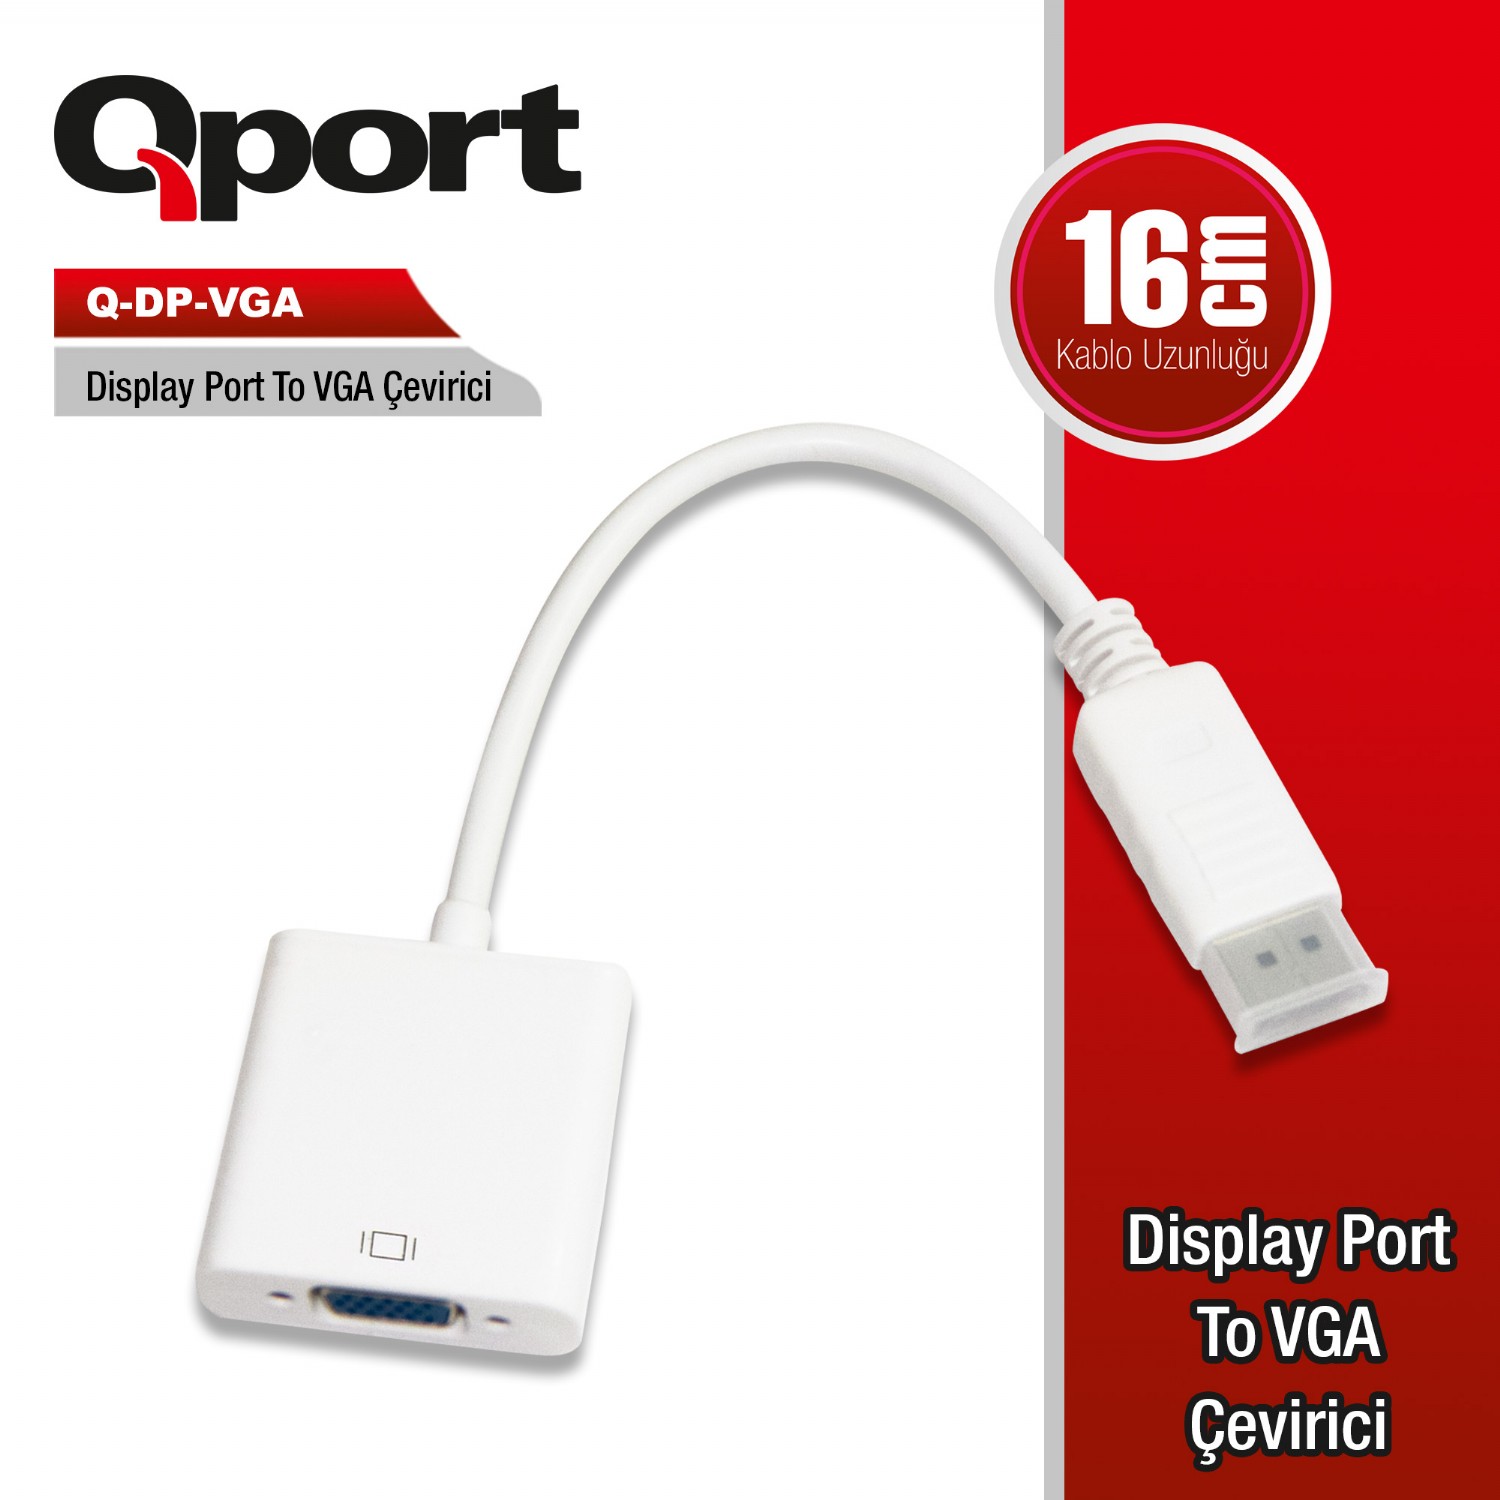 Q-DP-VGA